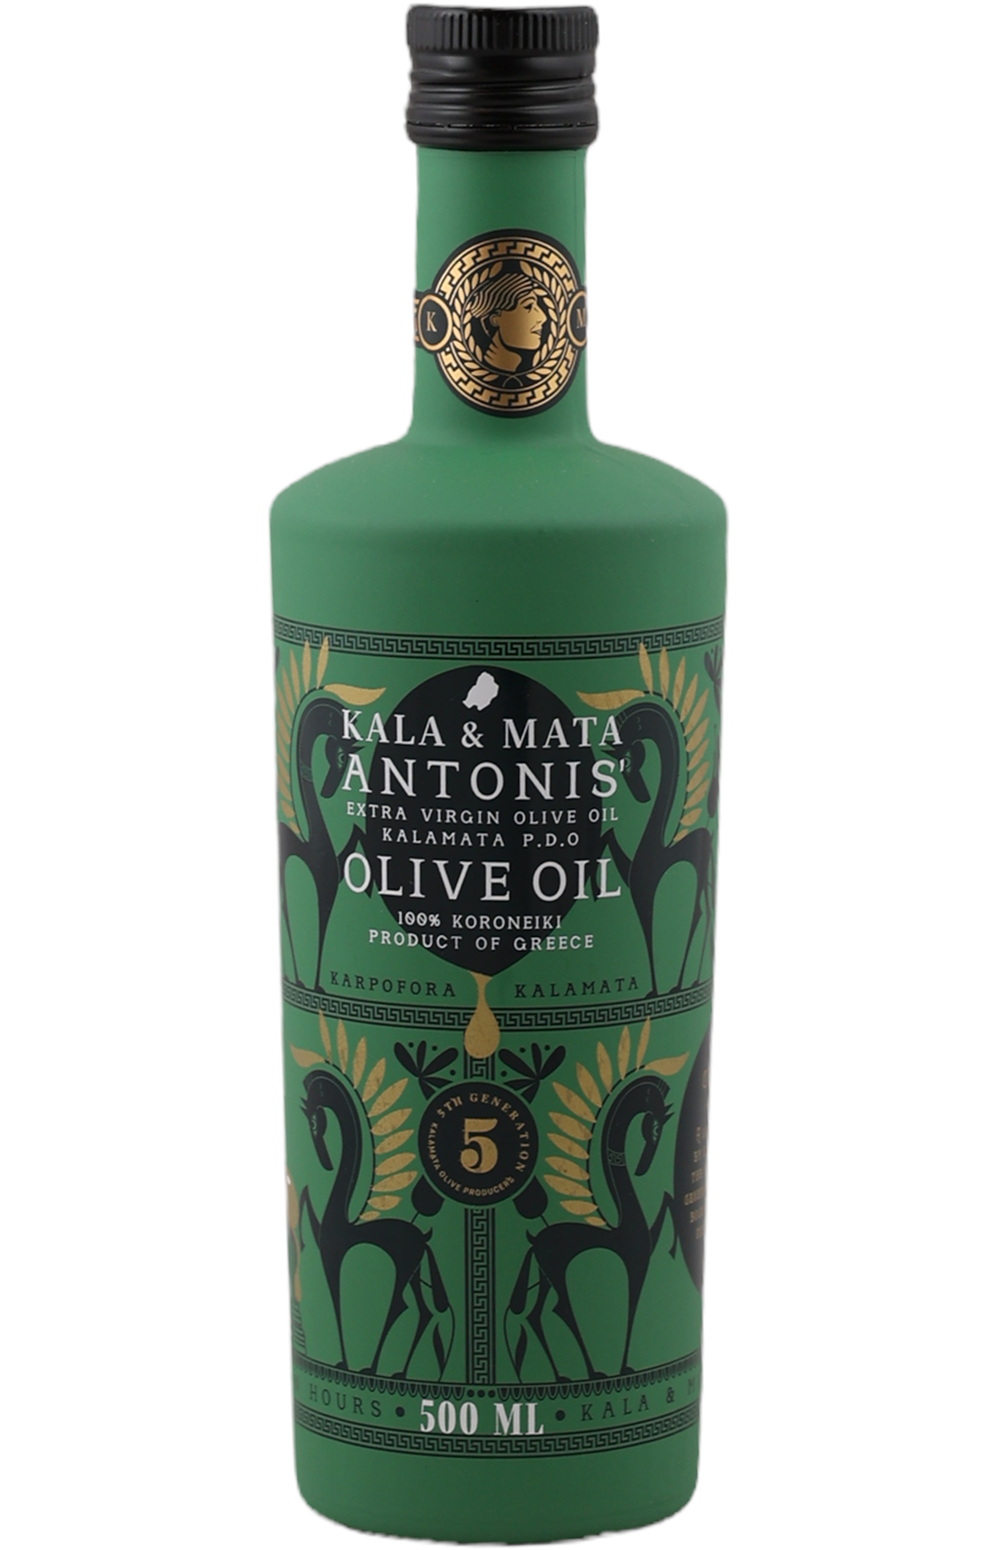 Kala & Mata- Antonis’ Extra Virgin Olive Oil